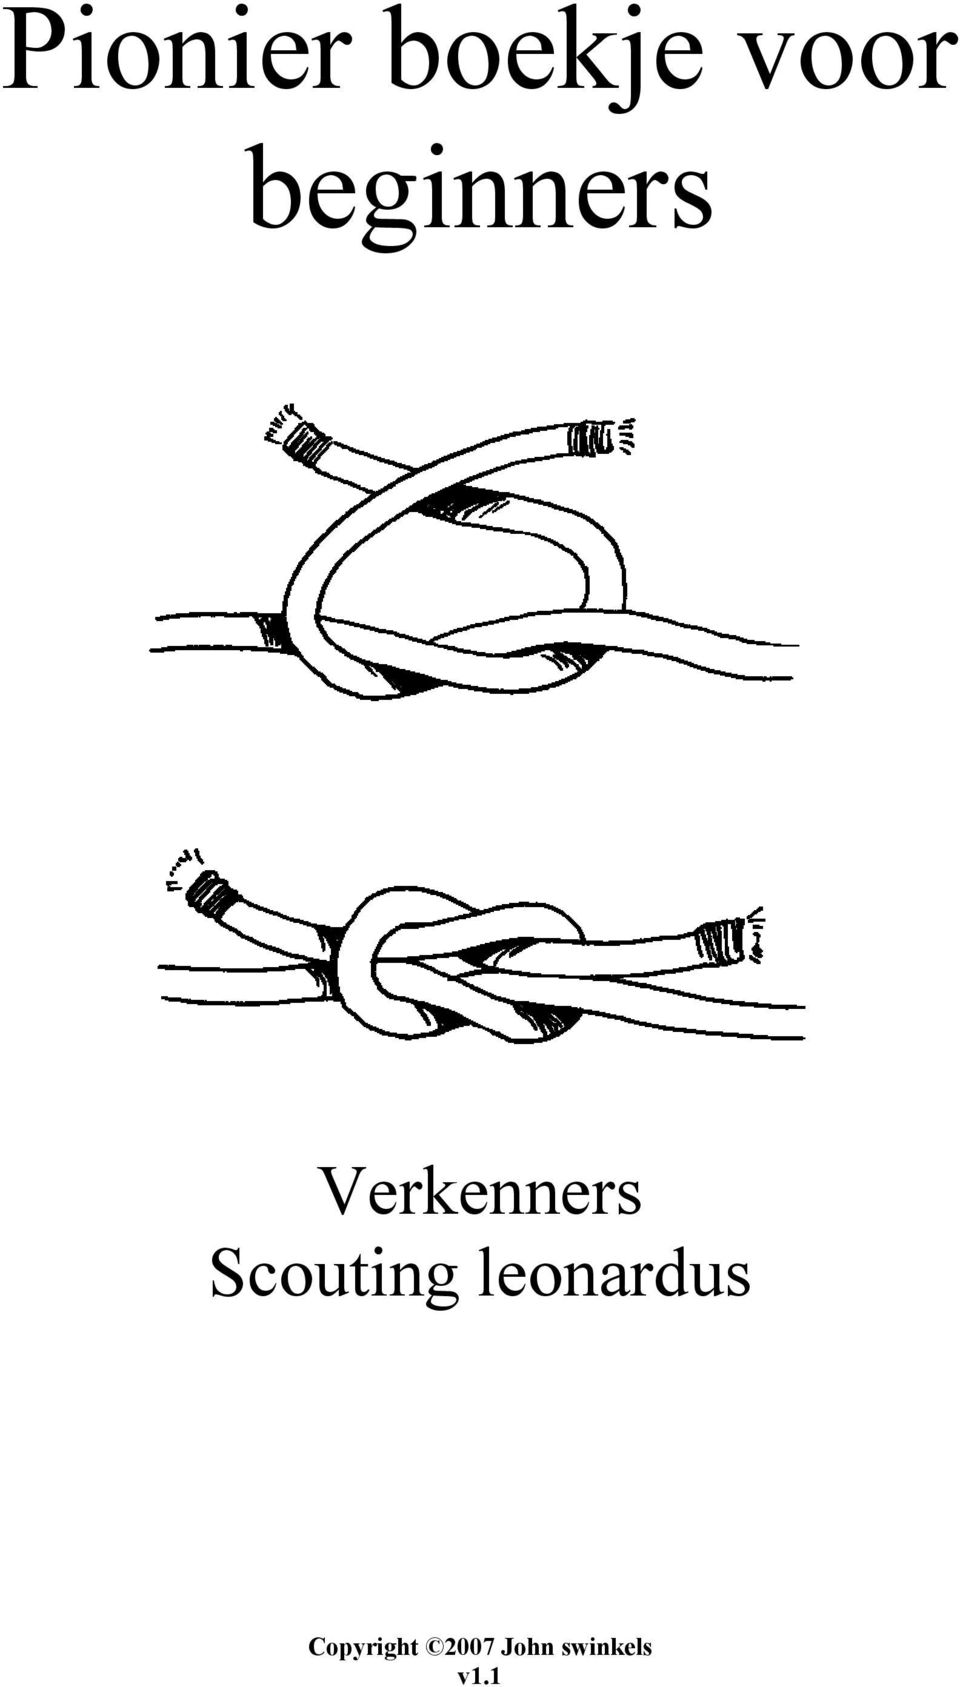 Scouting leonardus